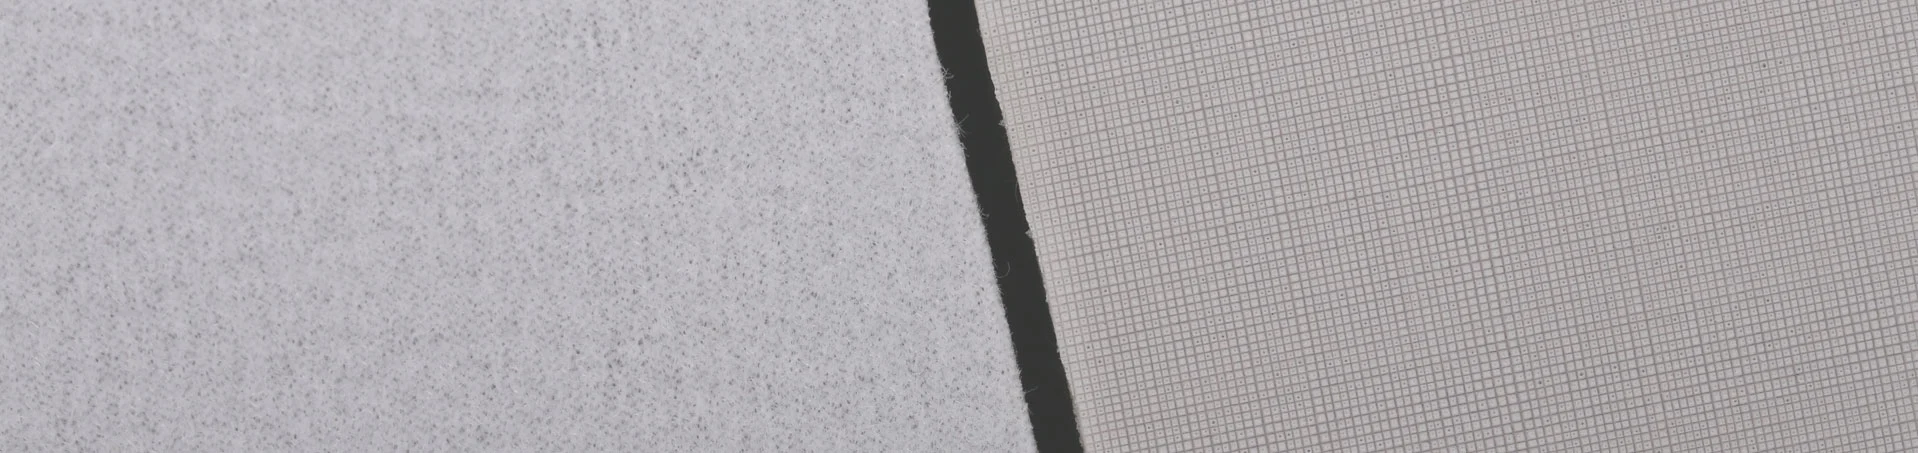 Fuji Star® Sheet Sandpaper